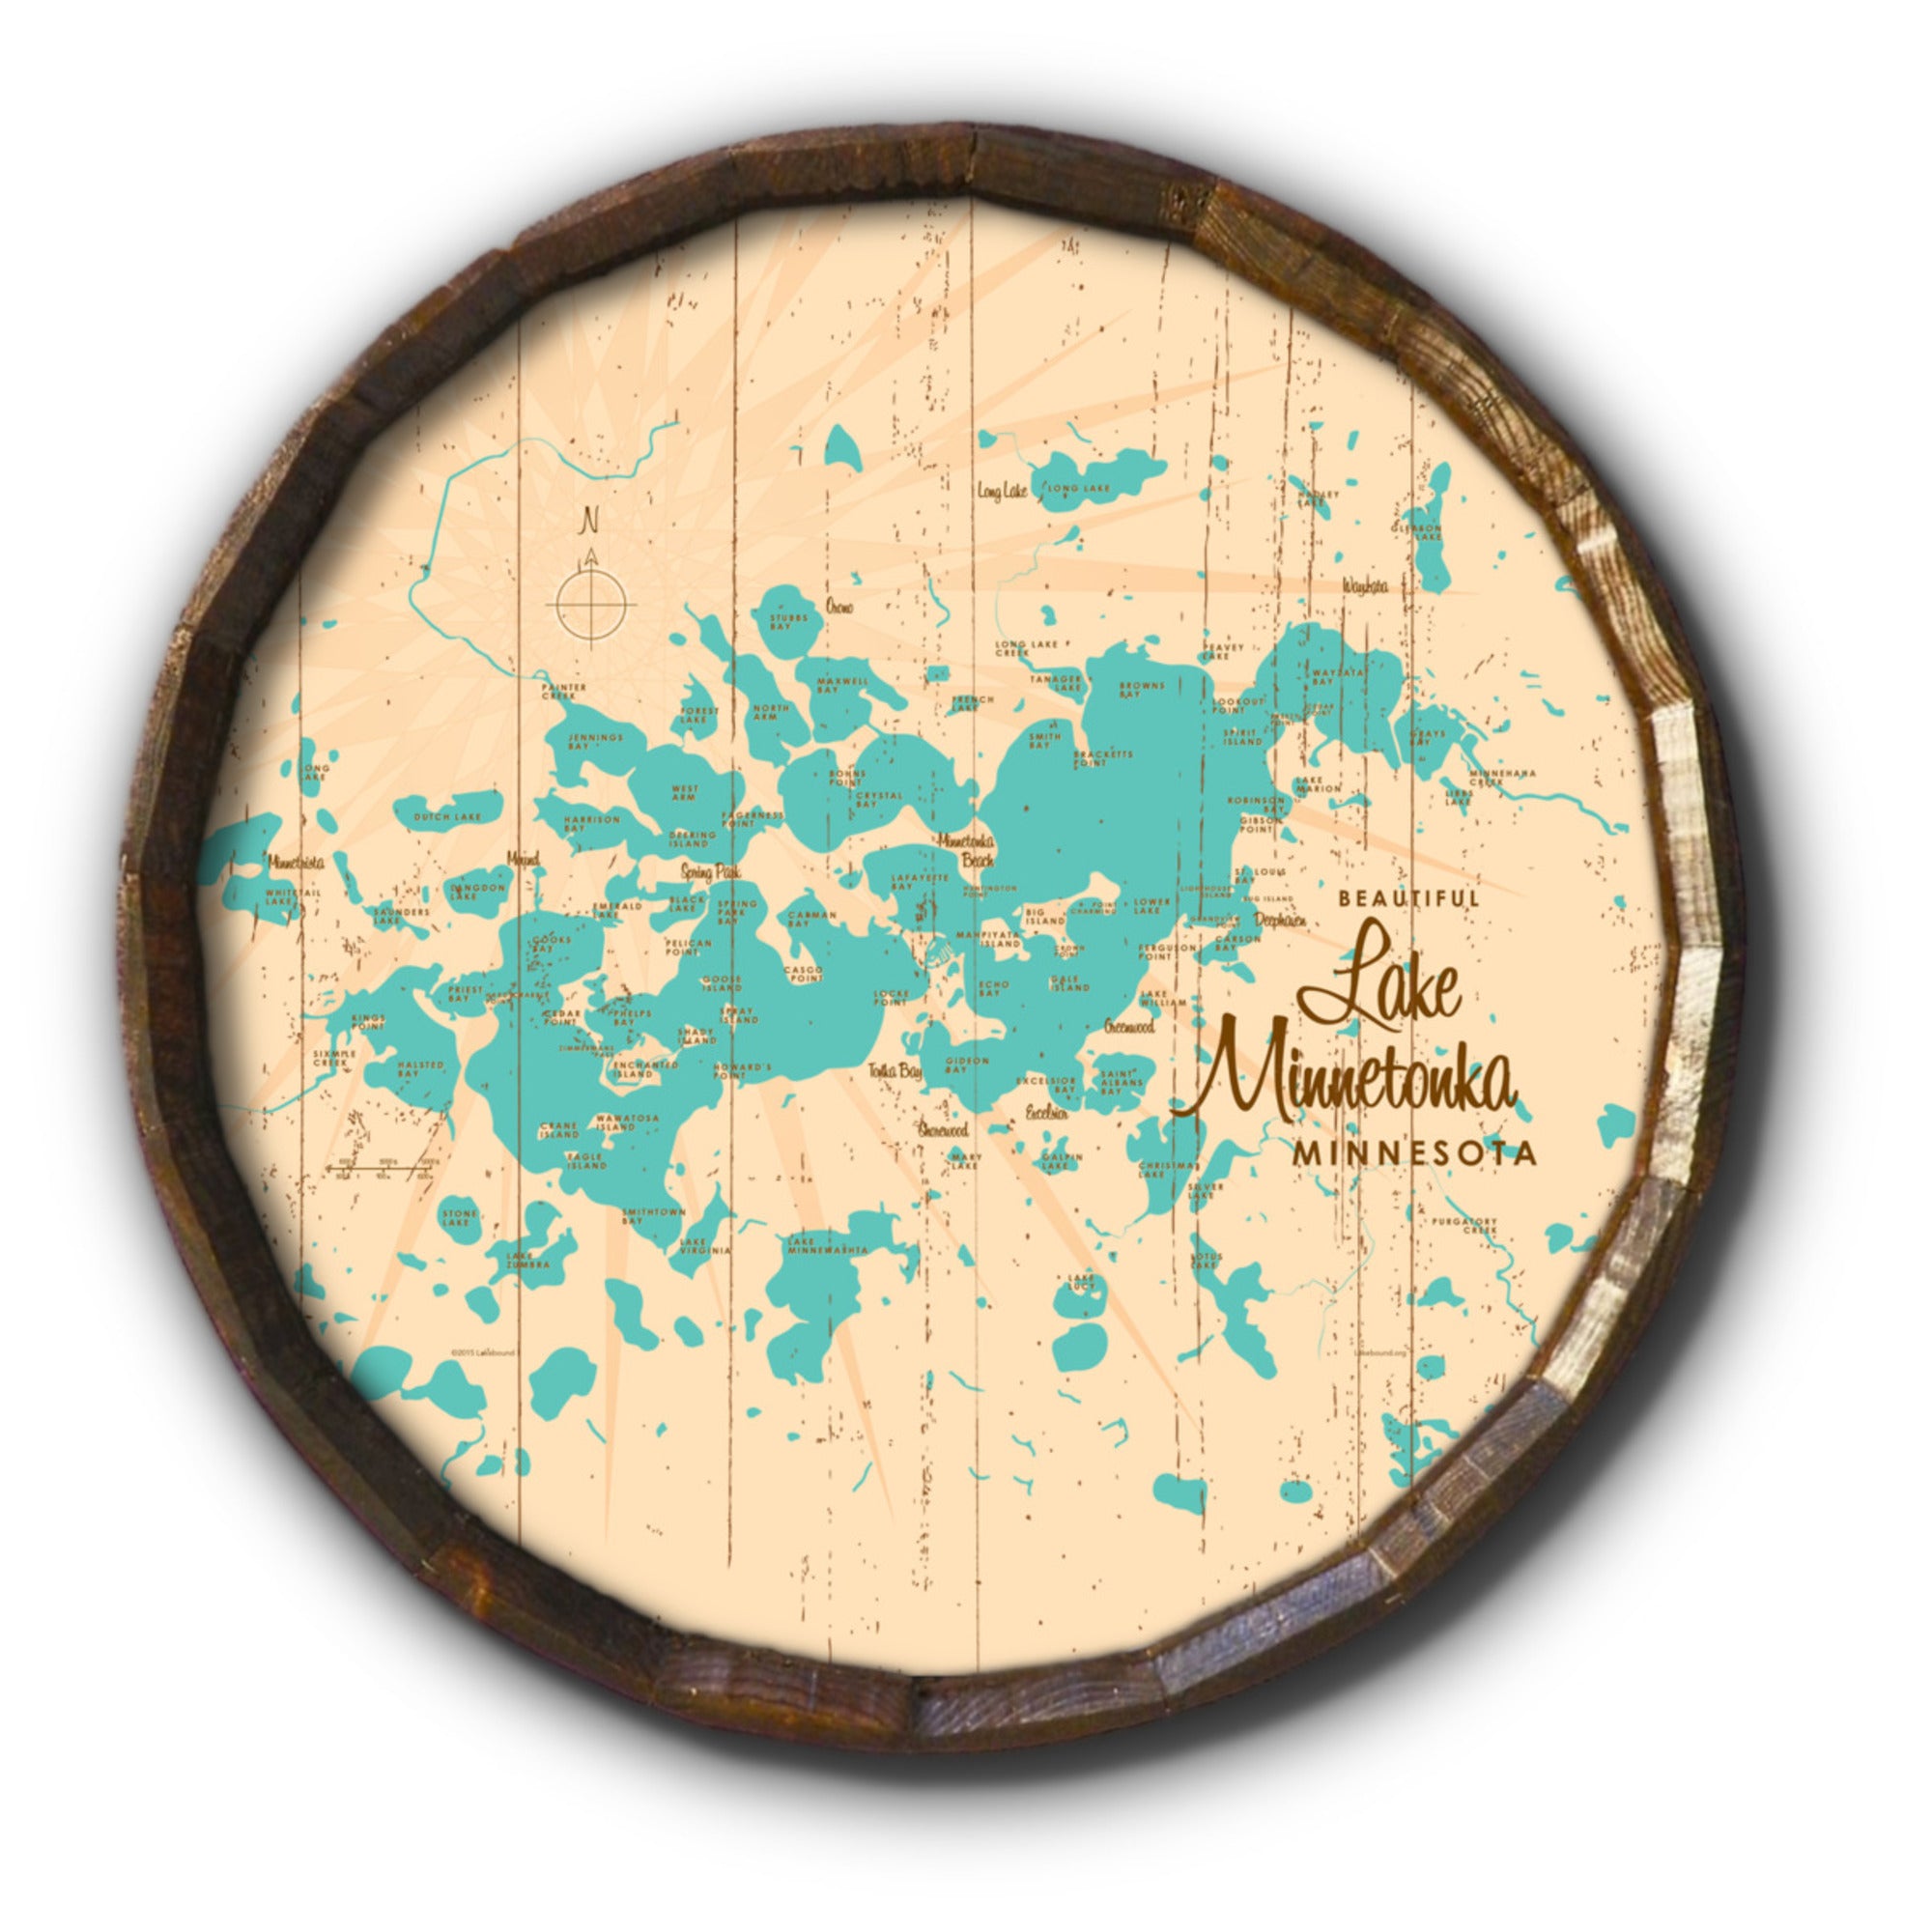 Lake Minnetonka Minnesota, Rustic Barrel End Map Art